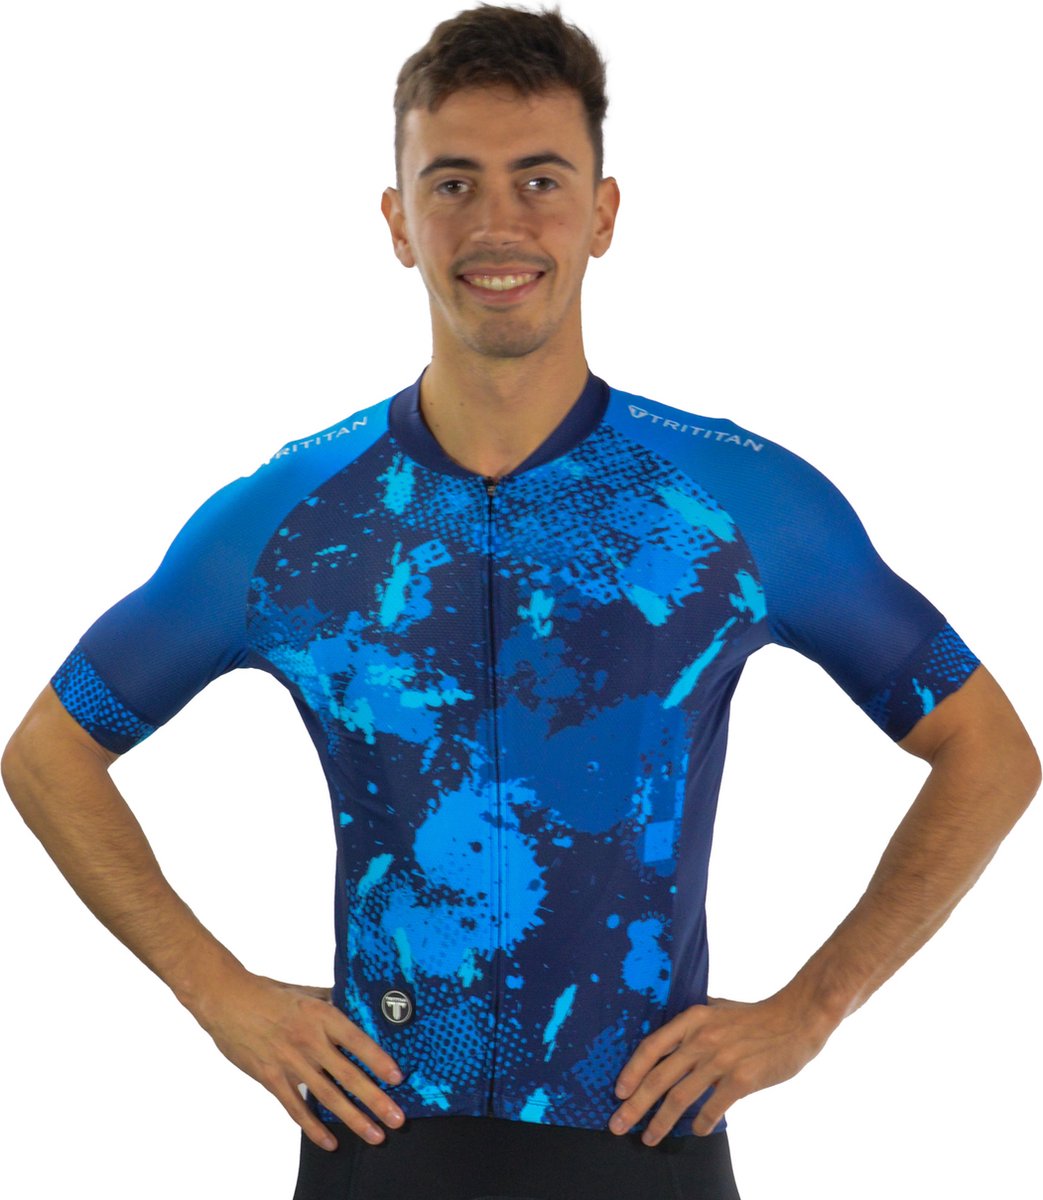 TriTiTan Male Elite Level Cycling Jersey with powerband - Fietsshirt - Fietstrui - 4XL